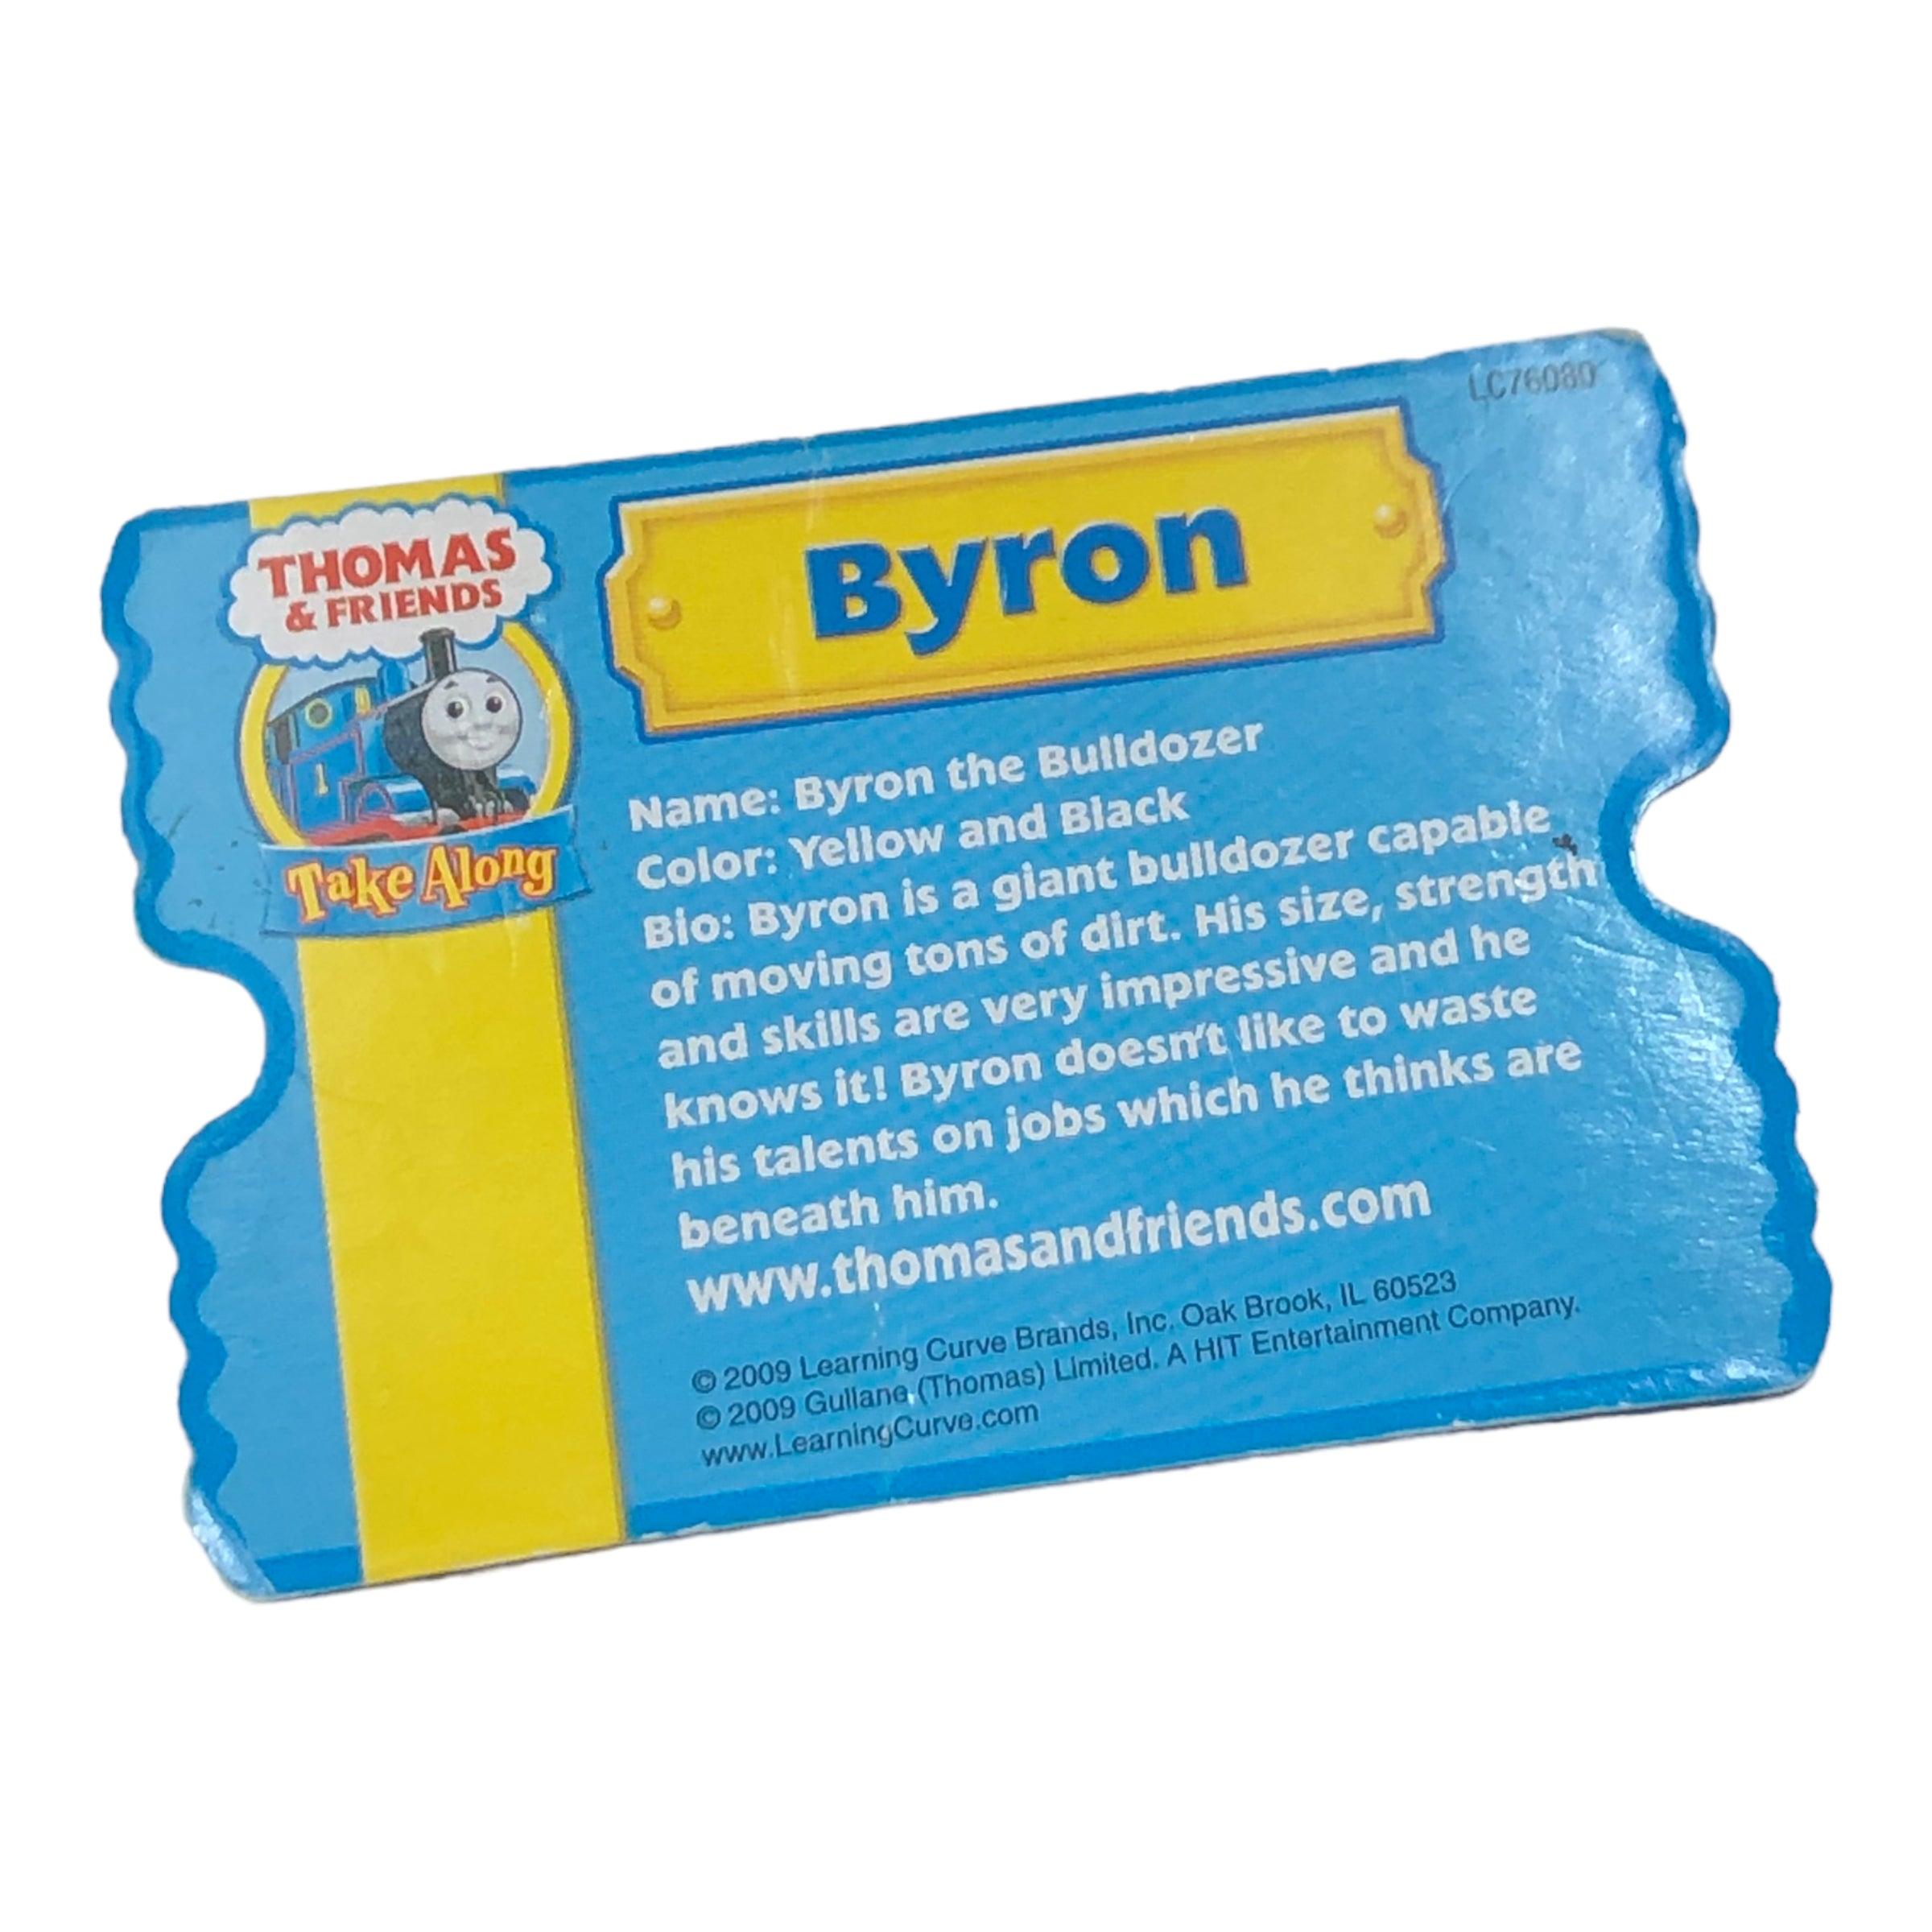 Take Along Byron Character Card